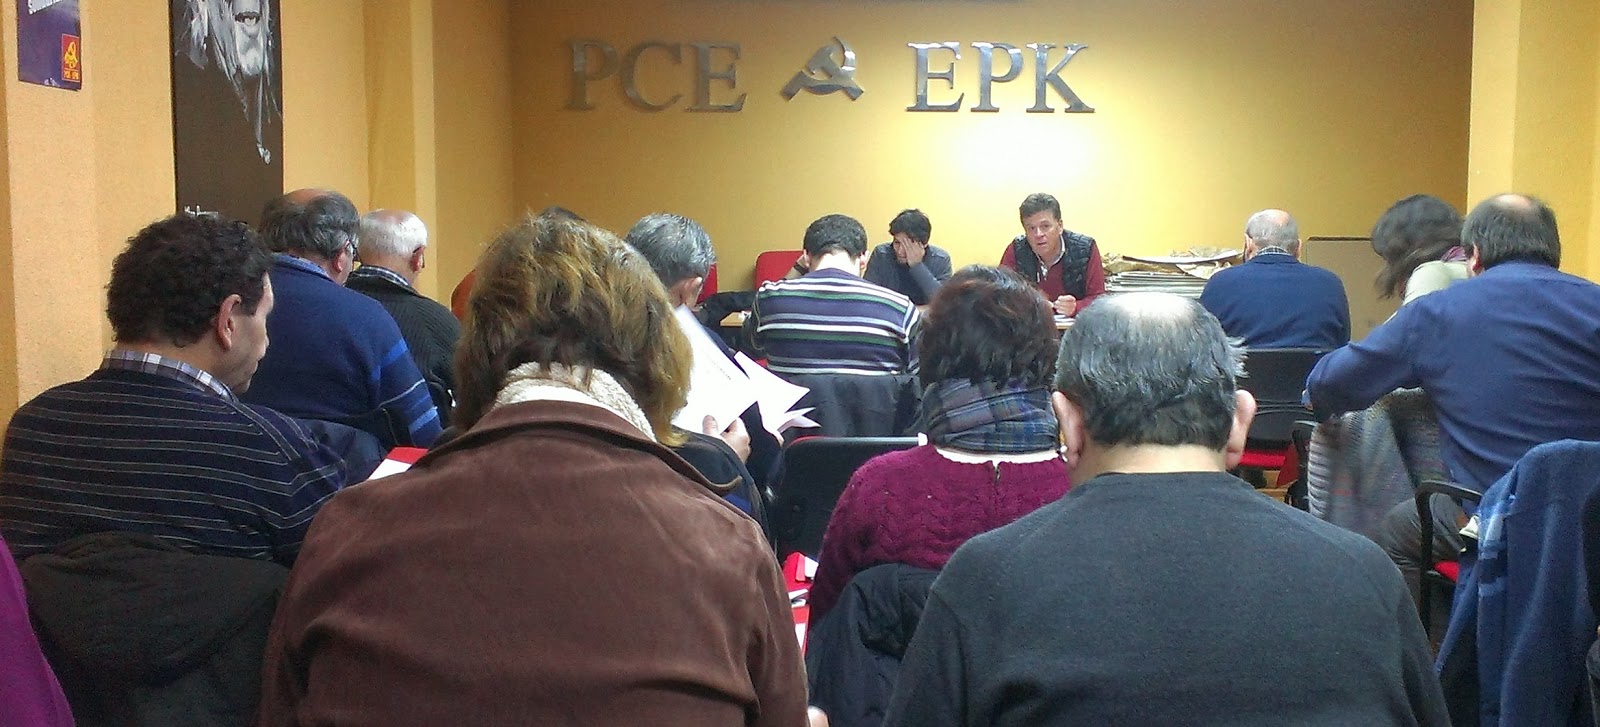 Convocada reunión del Comité Nacional del PCE-EPK